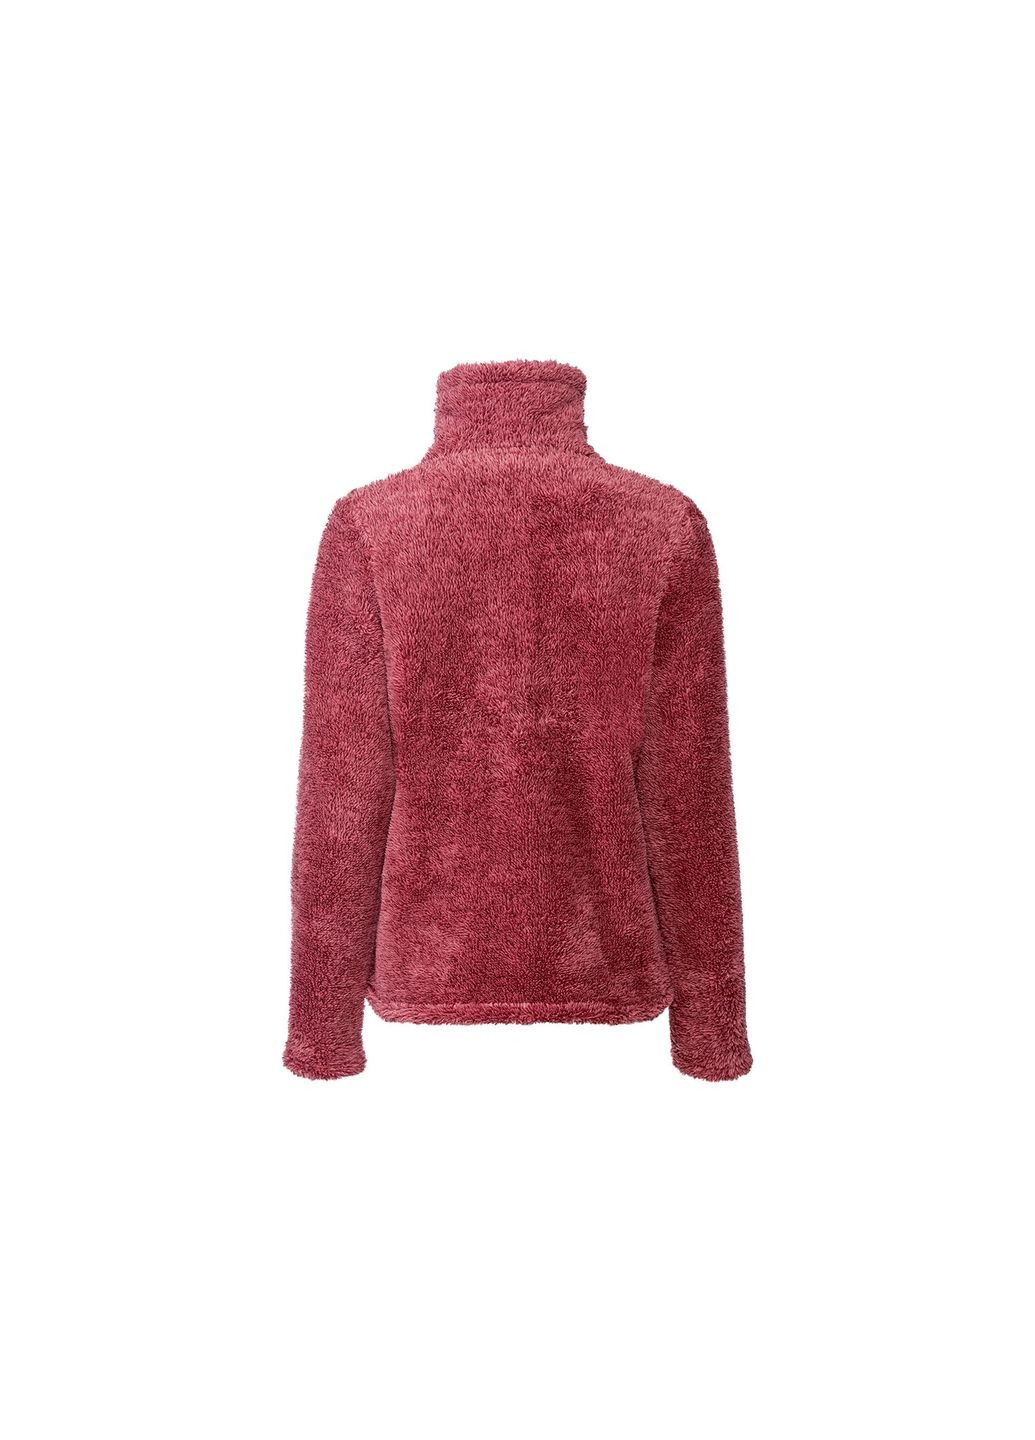 Розовая демисезонная куртка демисезонная плюшевая для женщины dope dyed 358111 Crivit